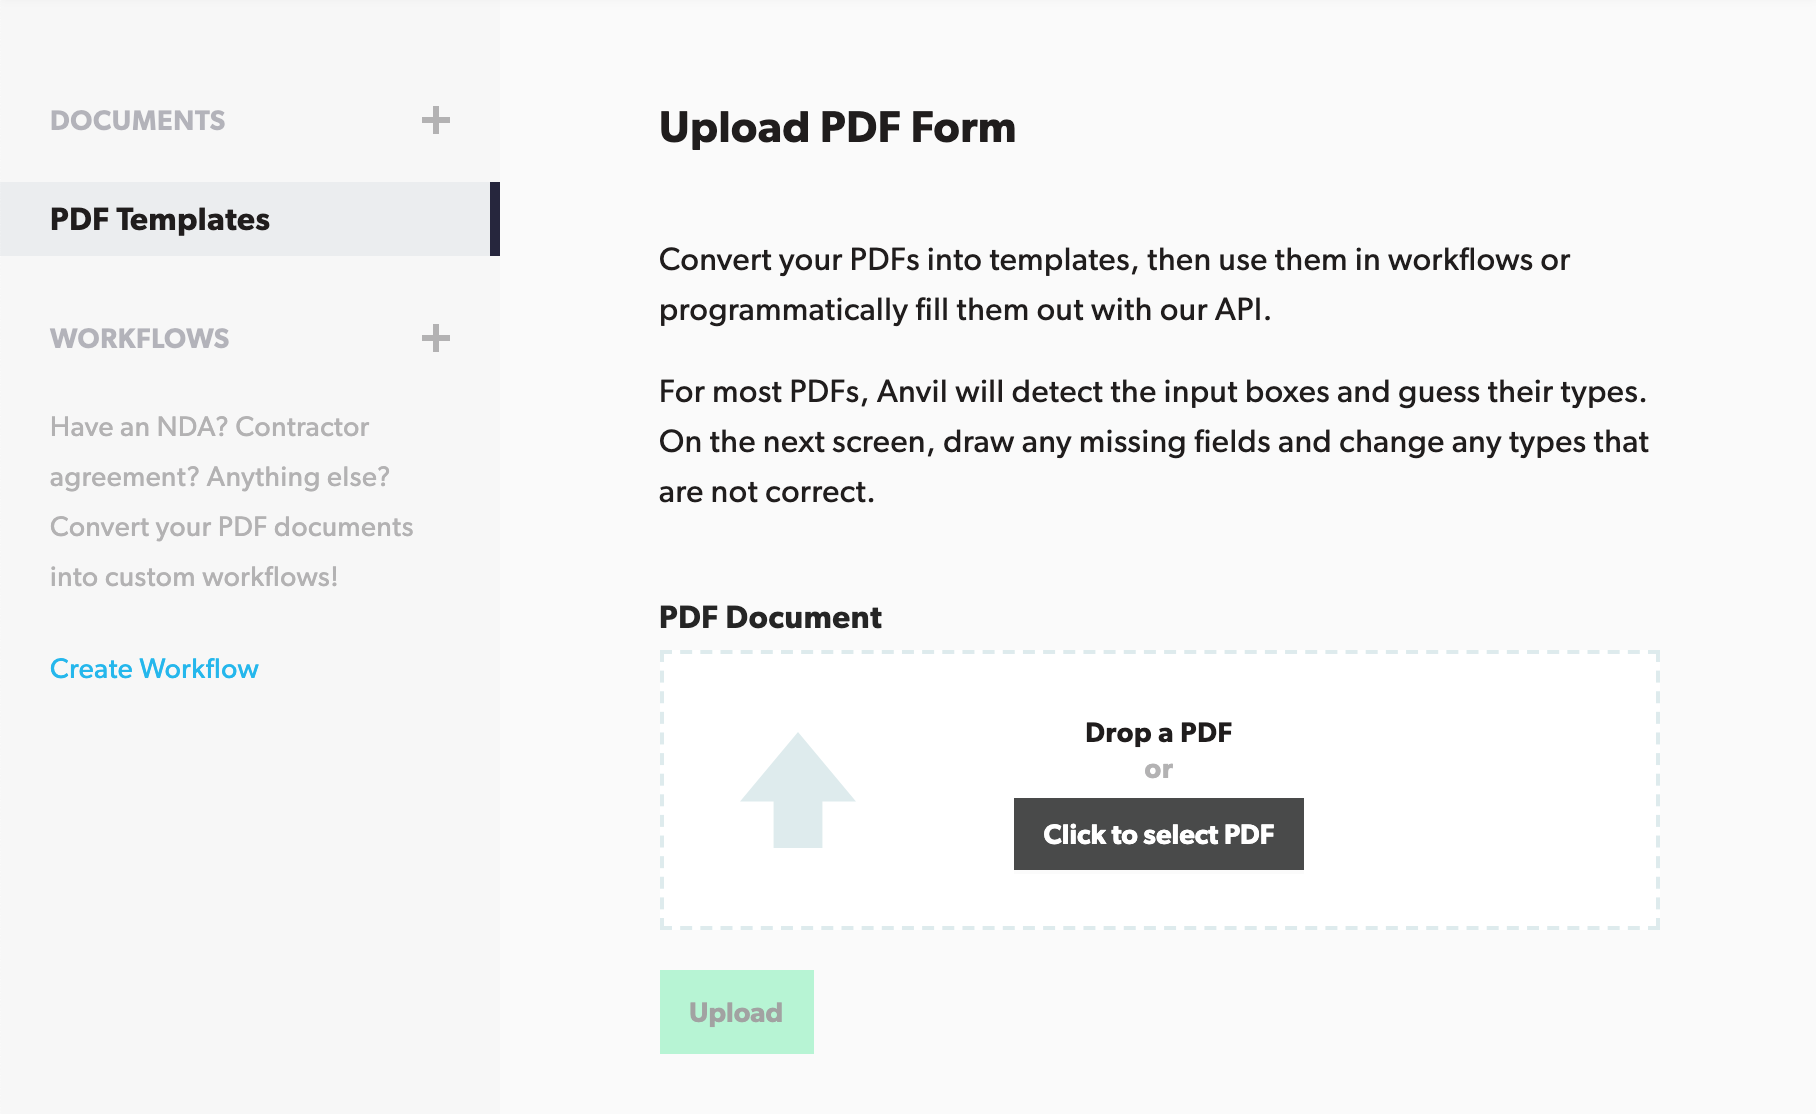 Uploading a PDF Form